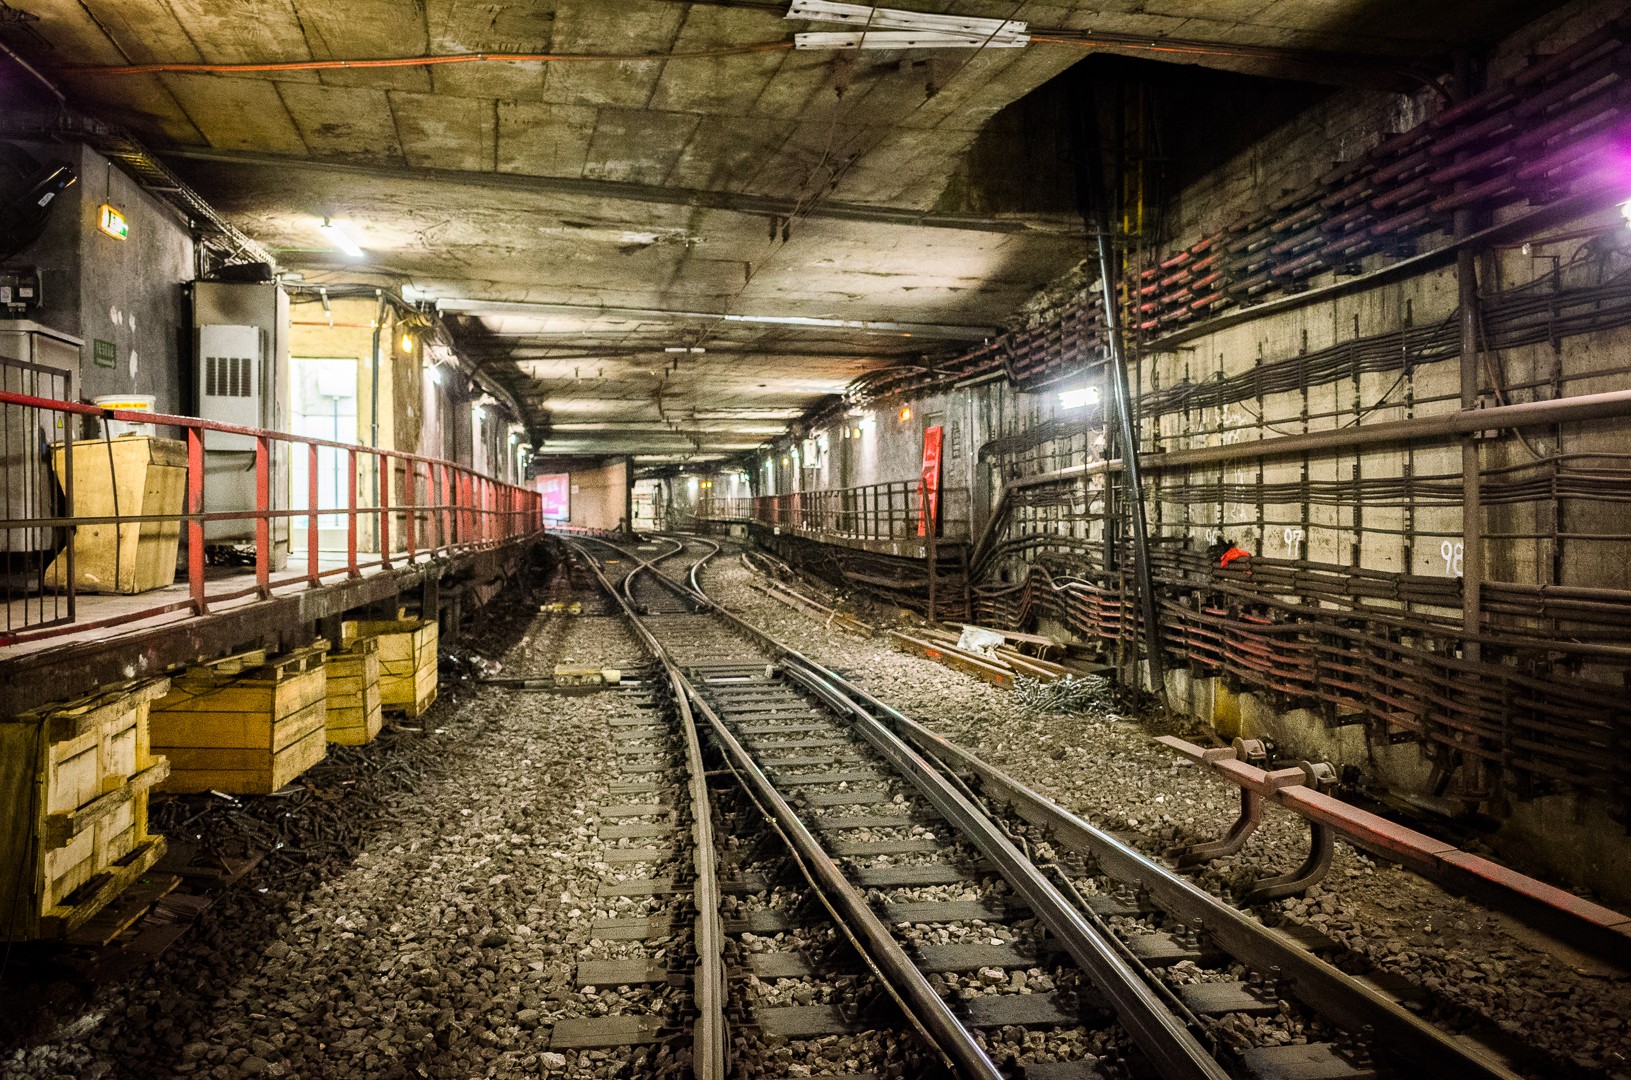 In tunel langa Piata Unirii - Metrou Bucuresti